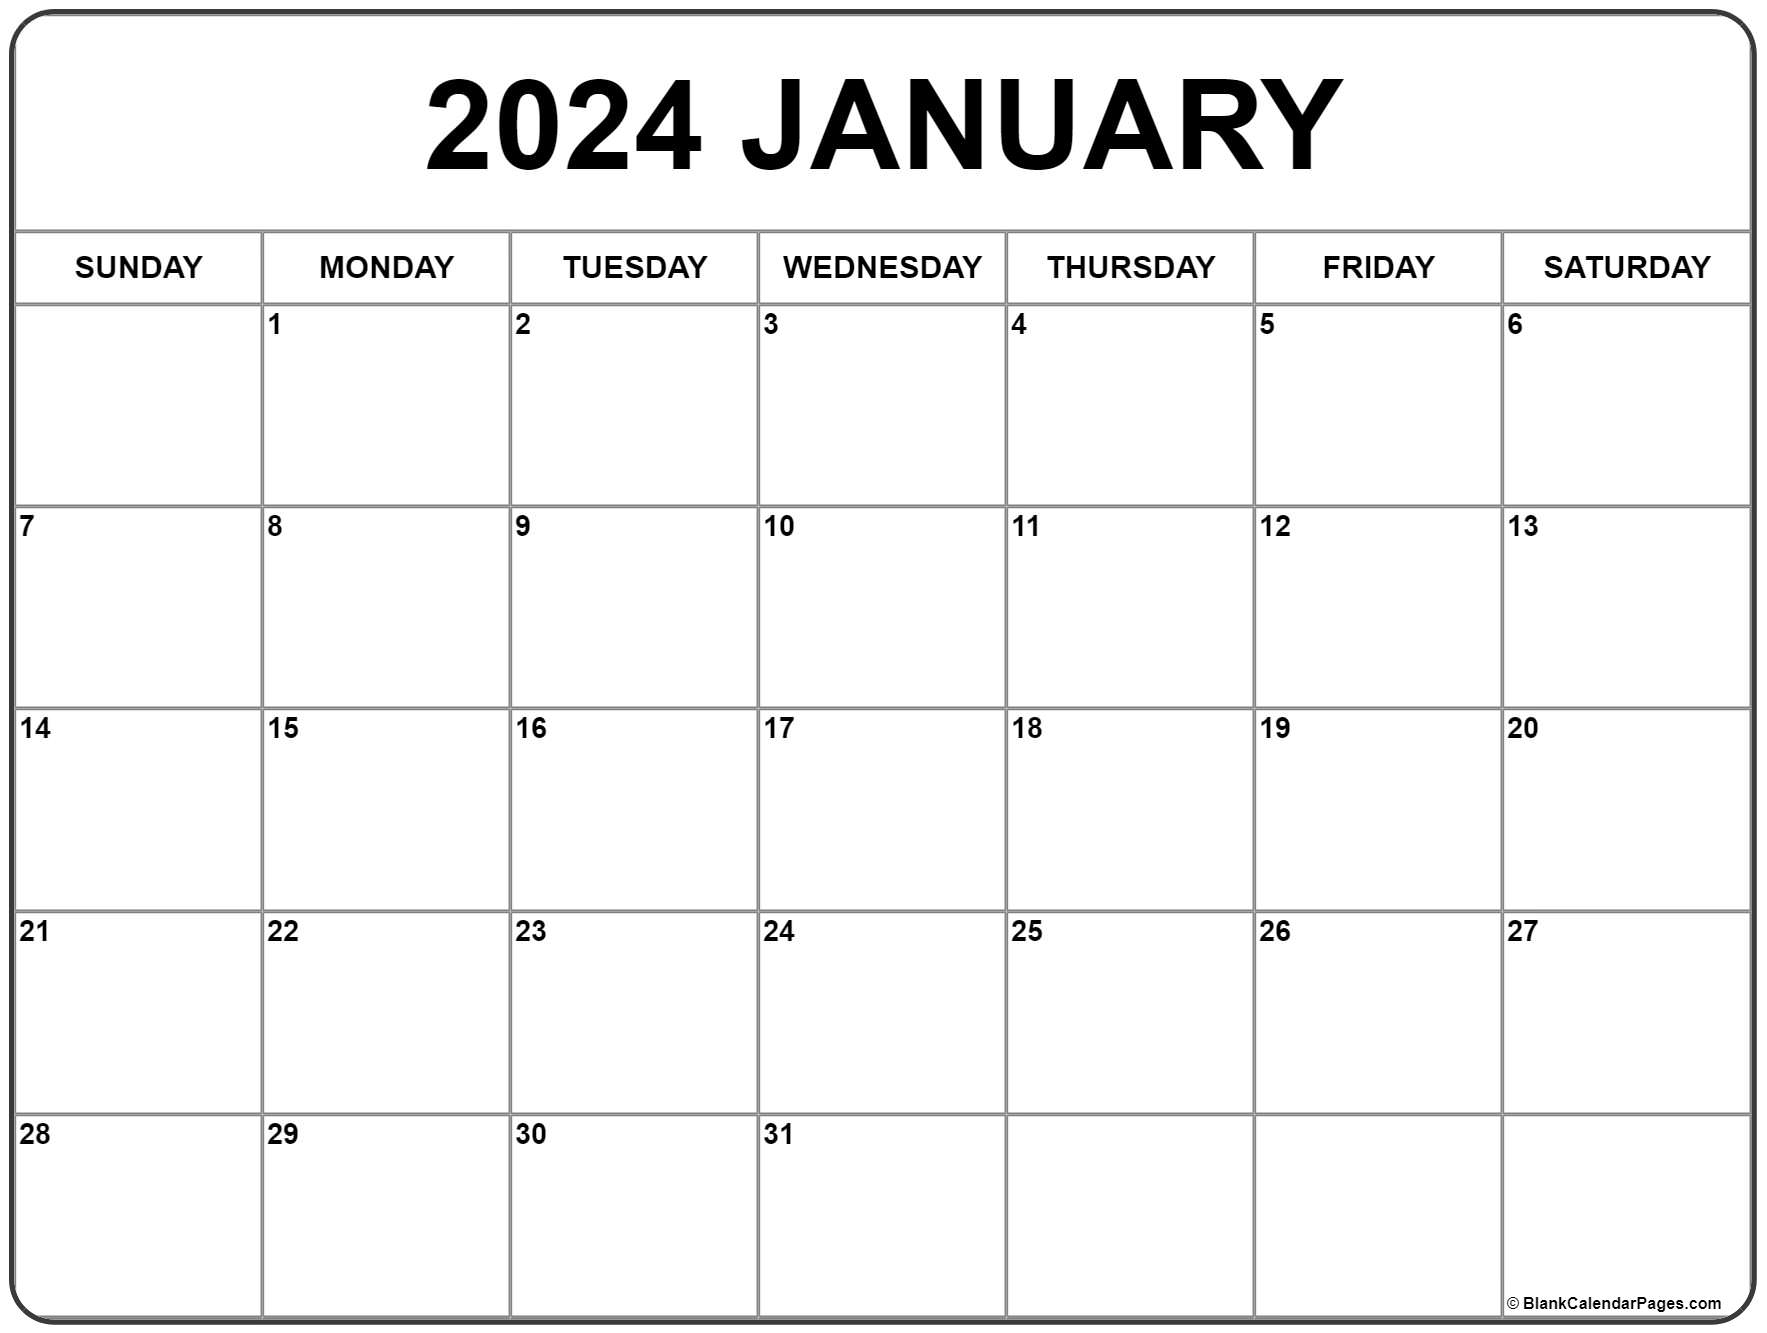 January 2024 Calendar | Free Printable Calendar for Jan 2024 Calendar Free Printable